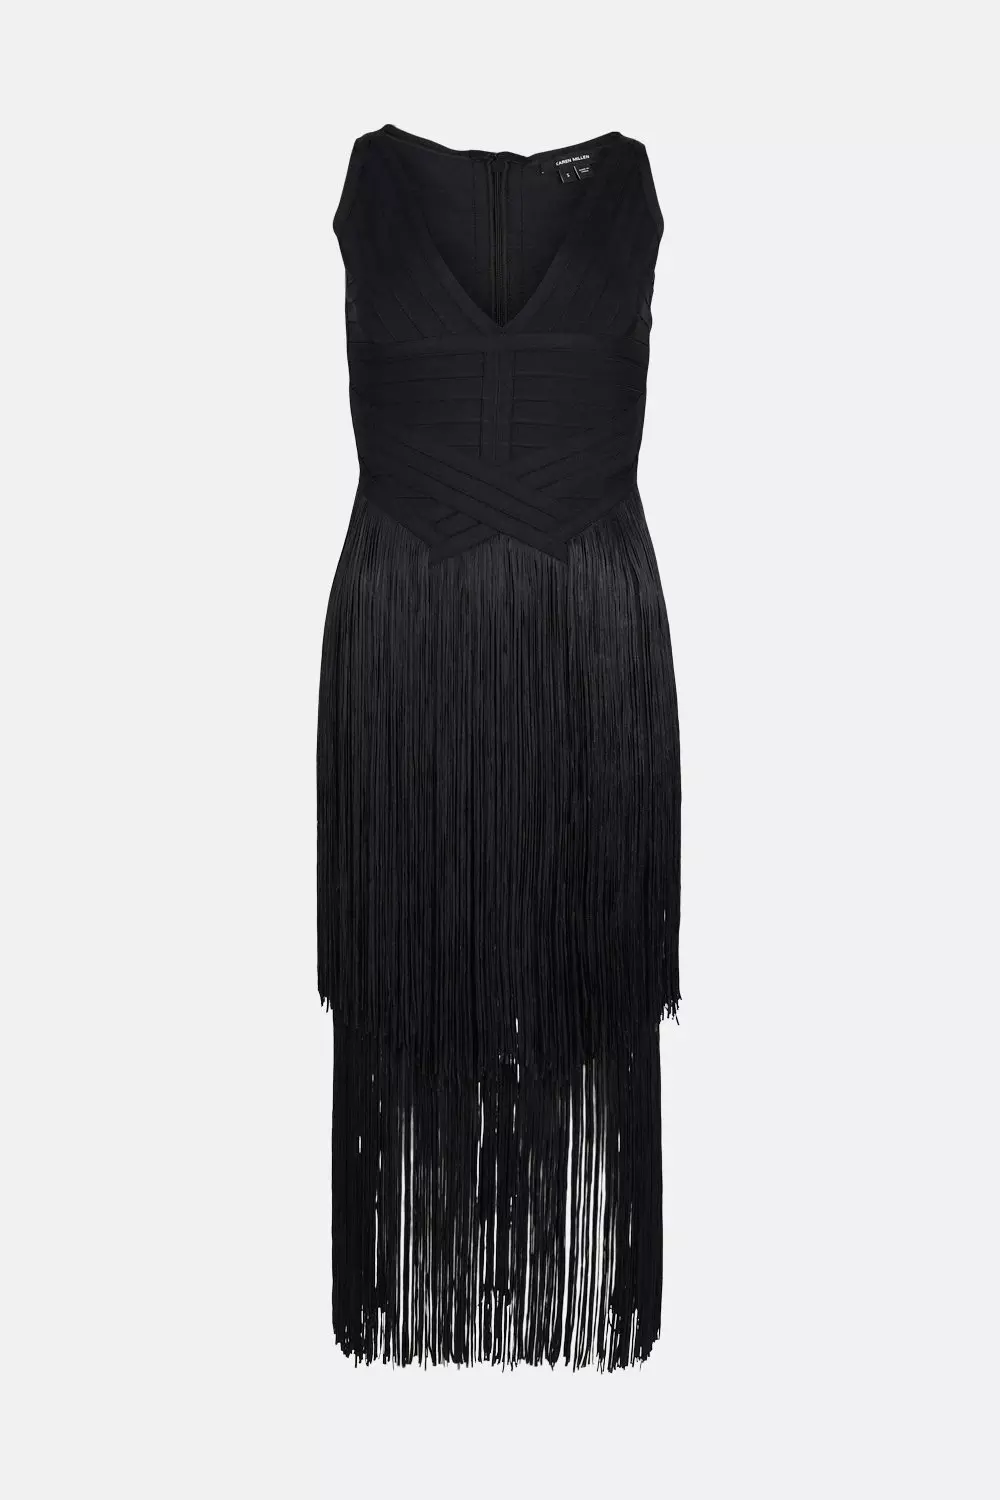 Gwen Elastic Waist Midi Black Dress - 785927